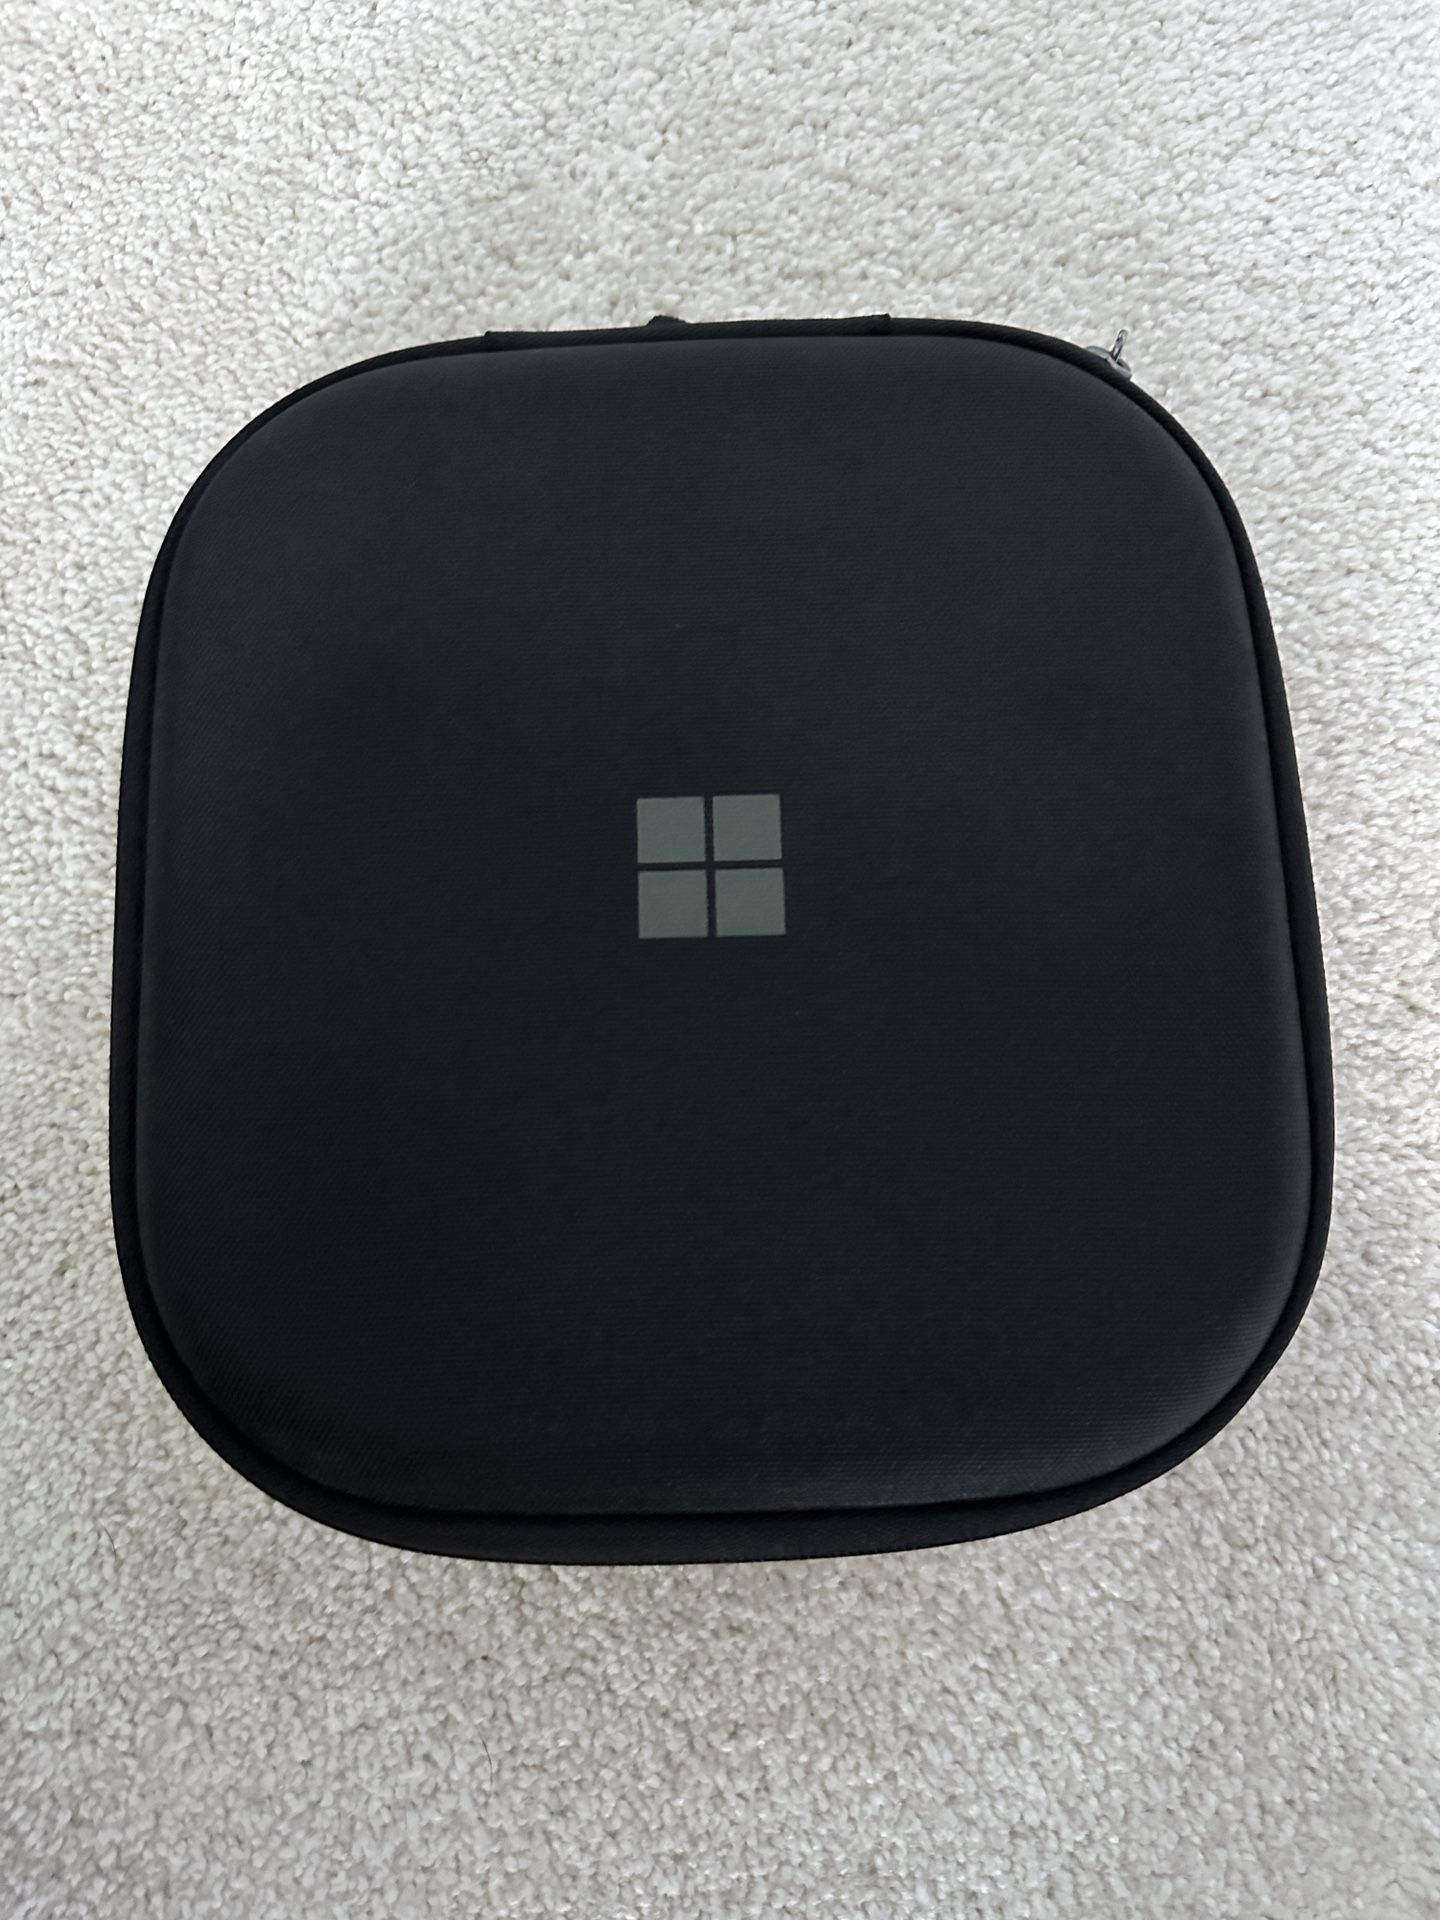 Microsoft Surface Wireless Headphones 